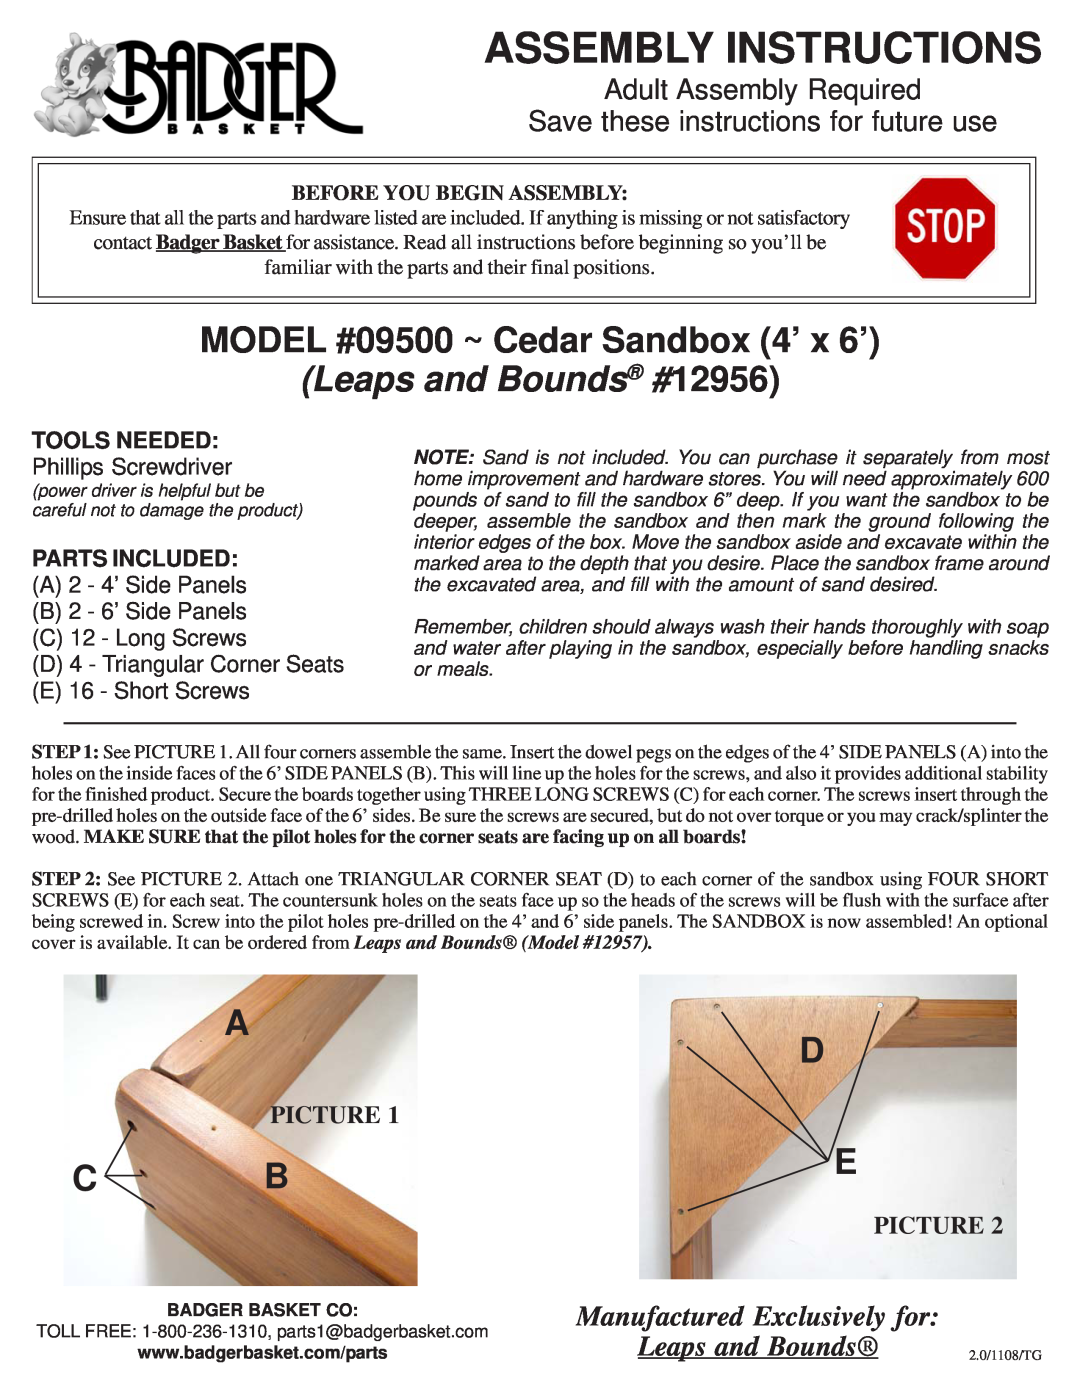 Badger Basket manual Assembly Instructions, MODEL #09500 ~ Cedar Sandbox 4’ x 6’, Leaps and Bounds #12956, C B E 